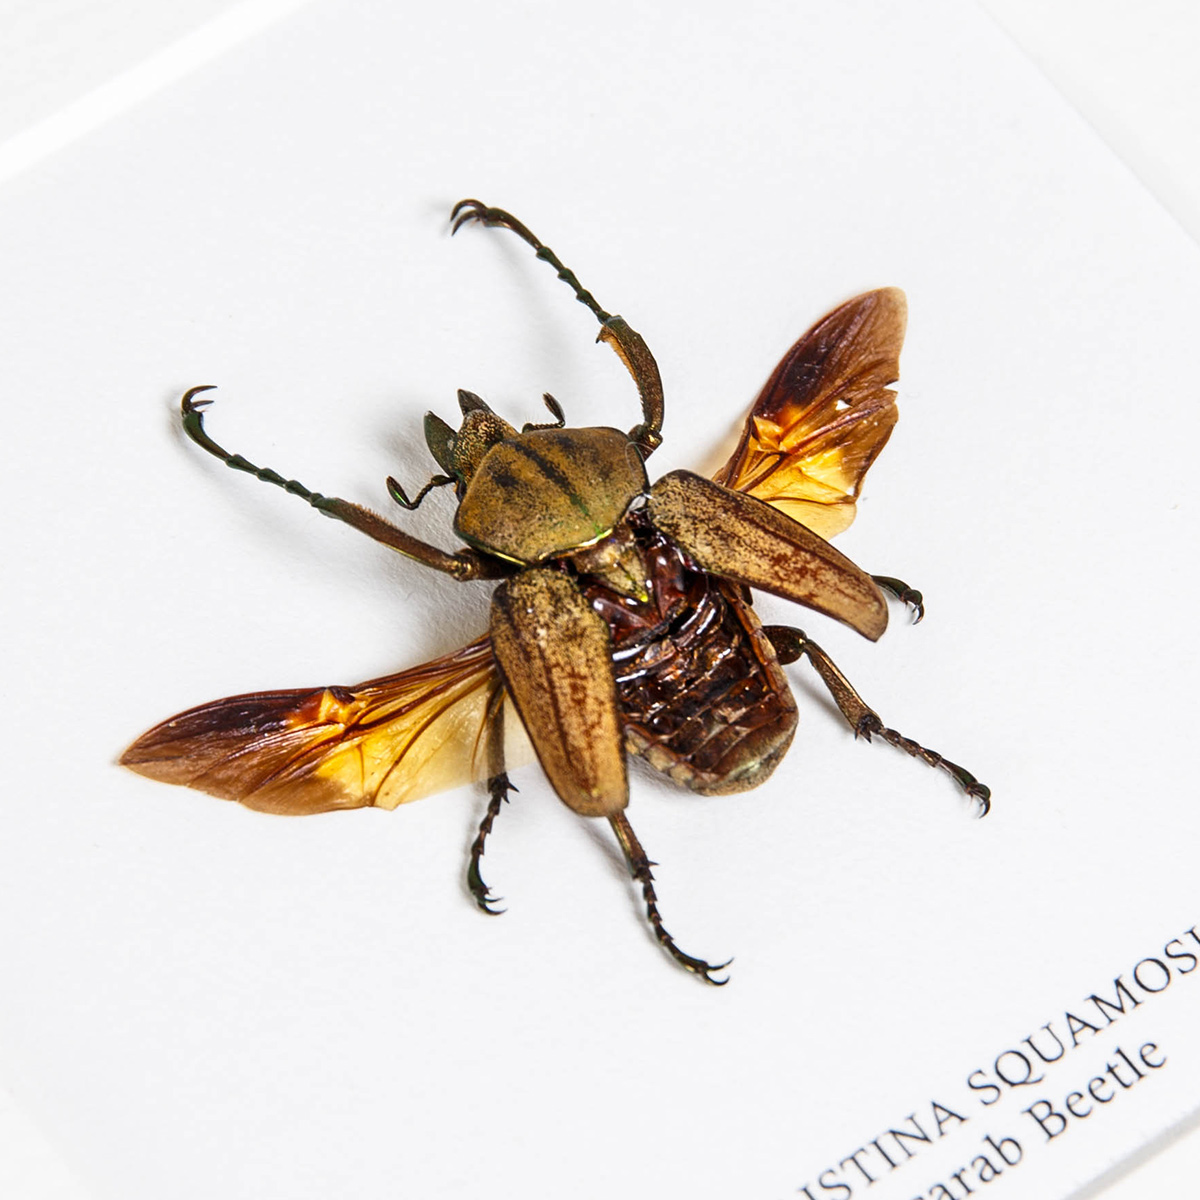 Brown Scarab Beetle In Box Frame (Philistina squamosus)